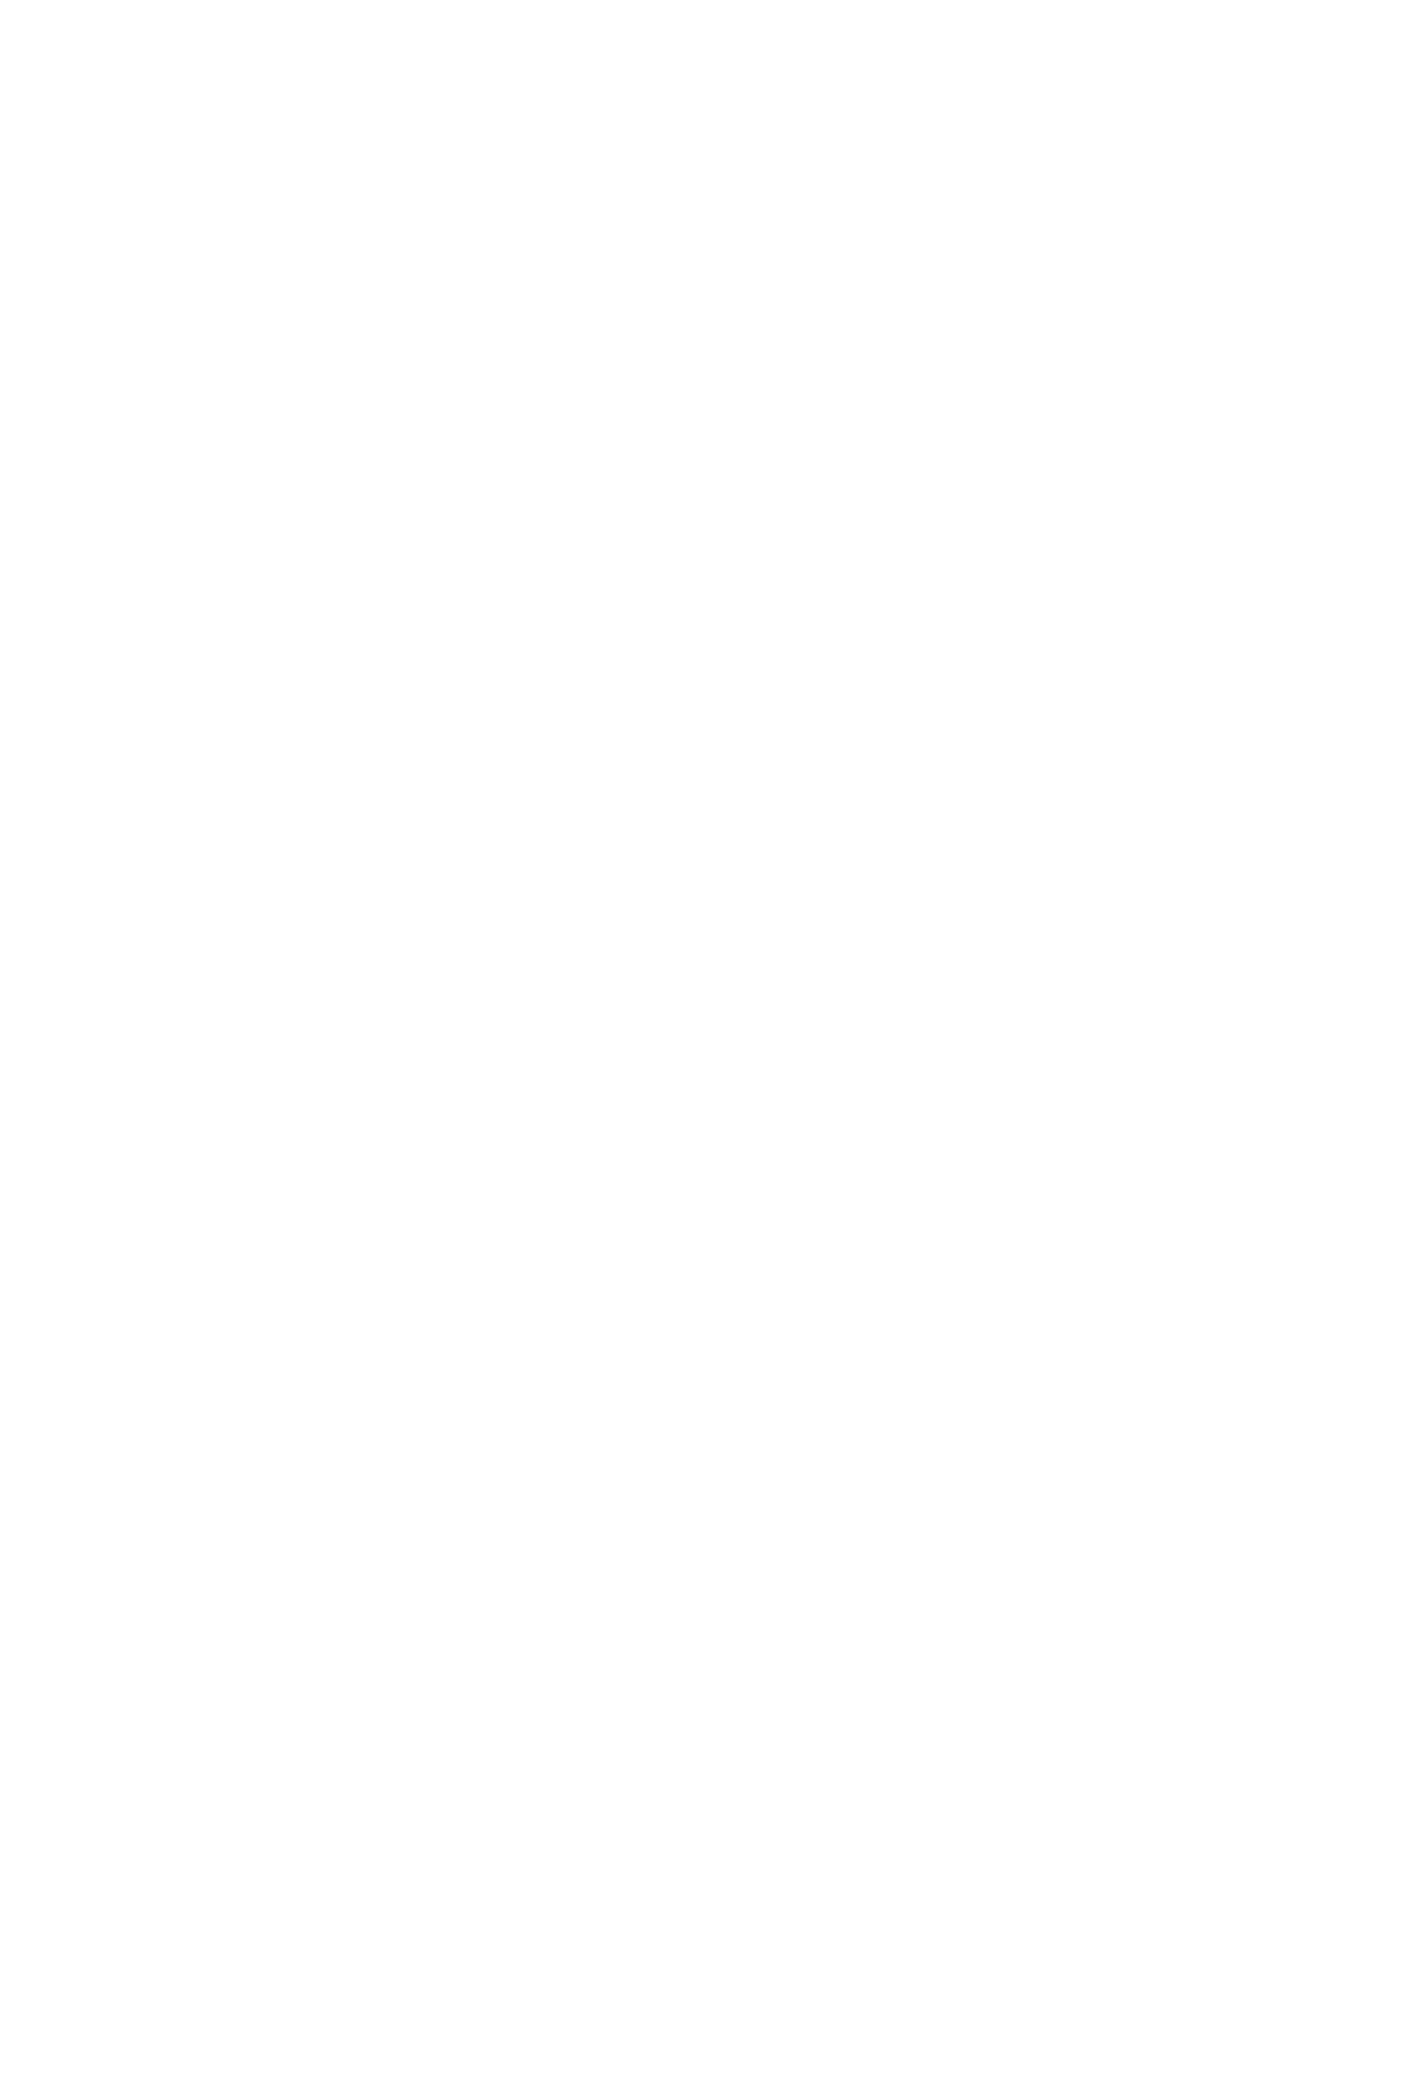 Toitū_enviro mark gold_White